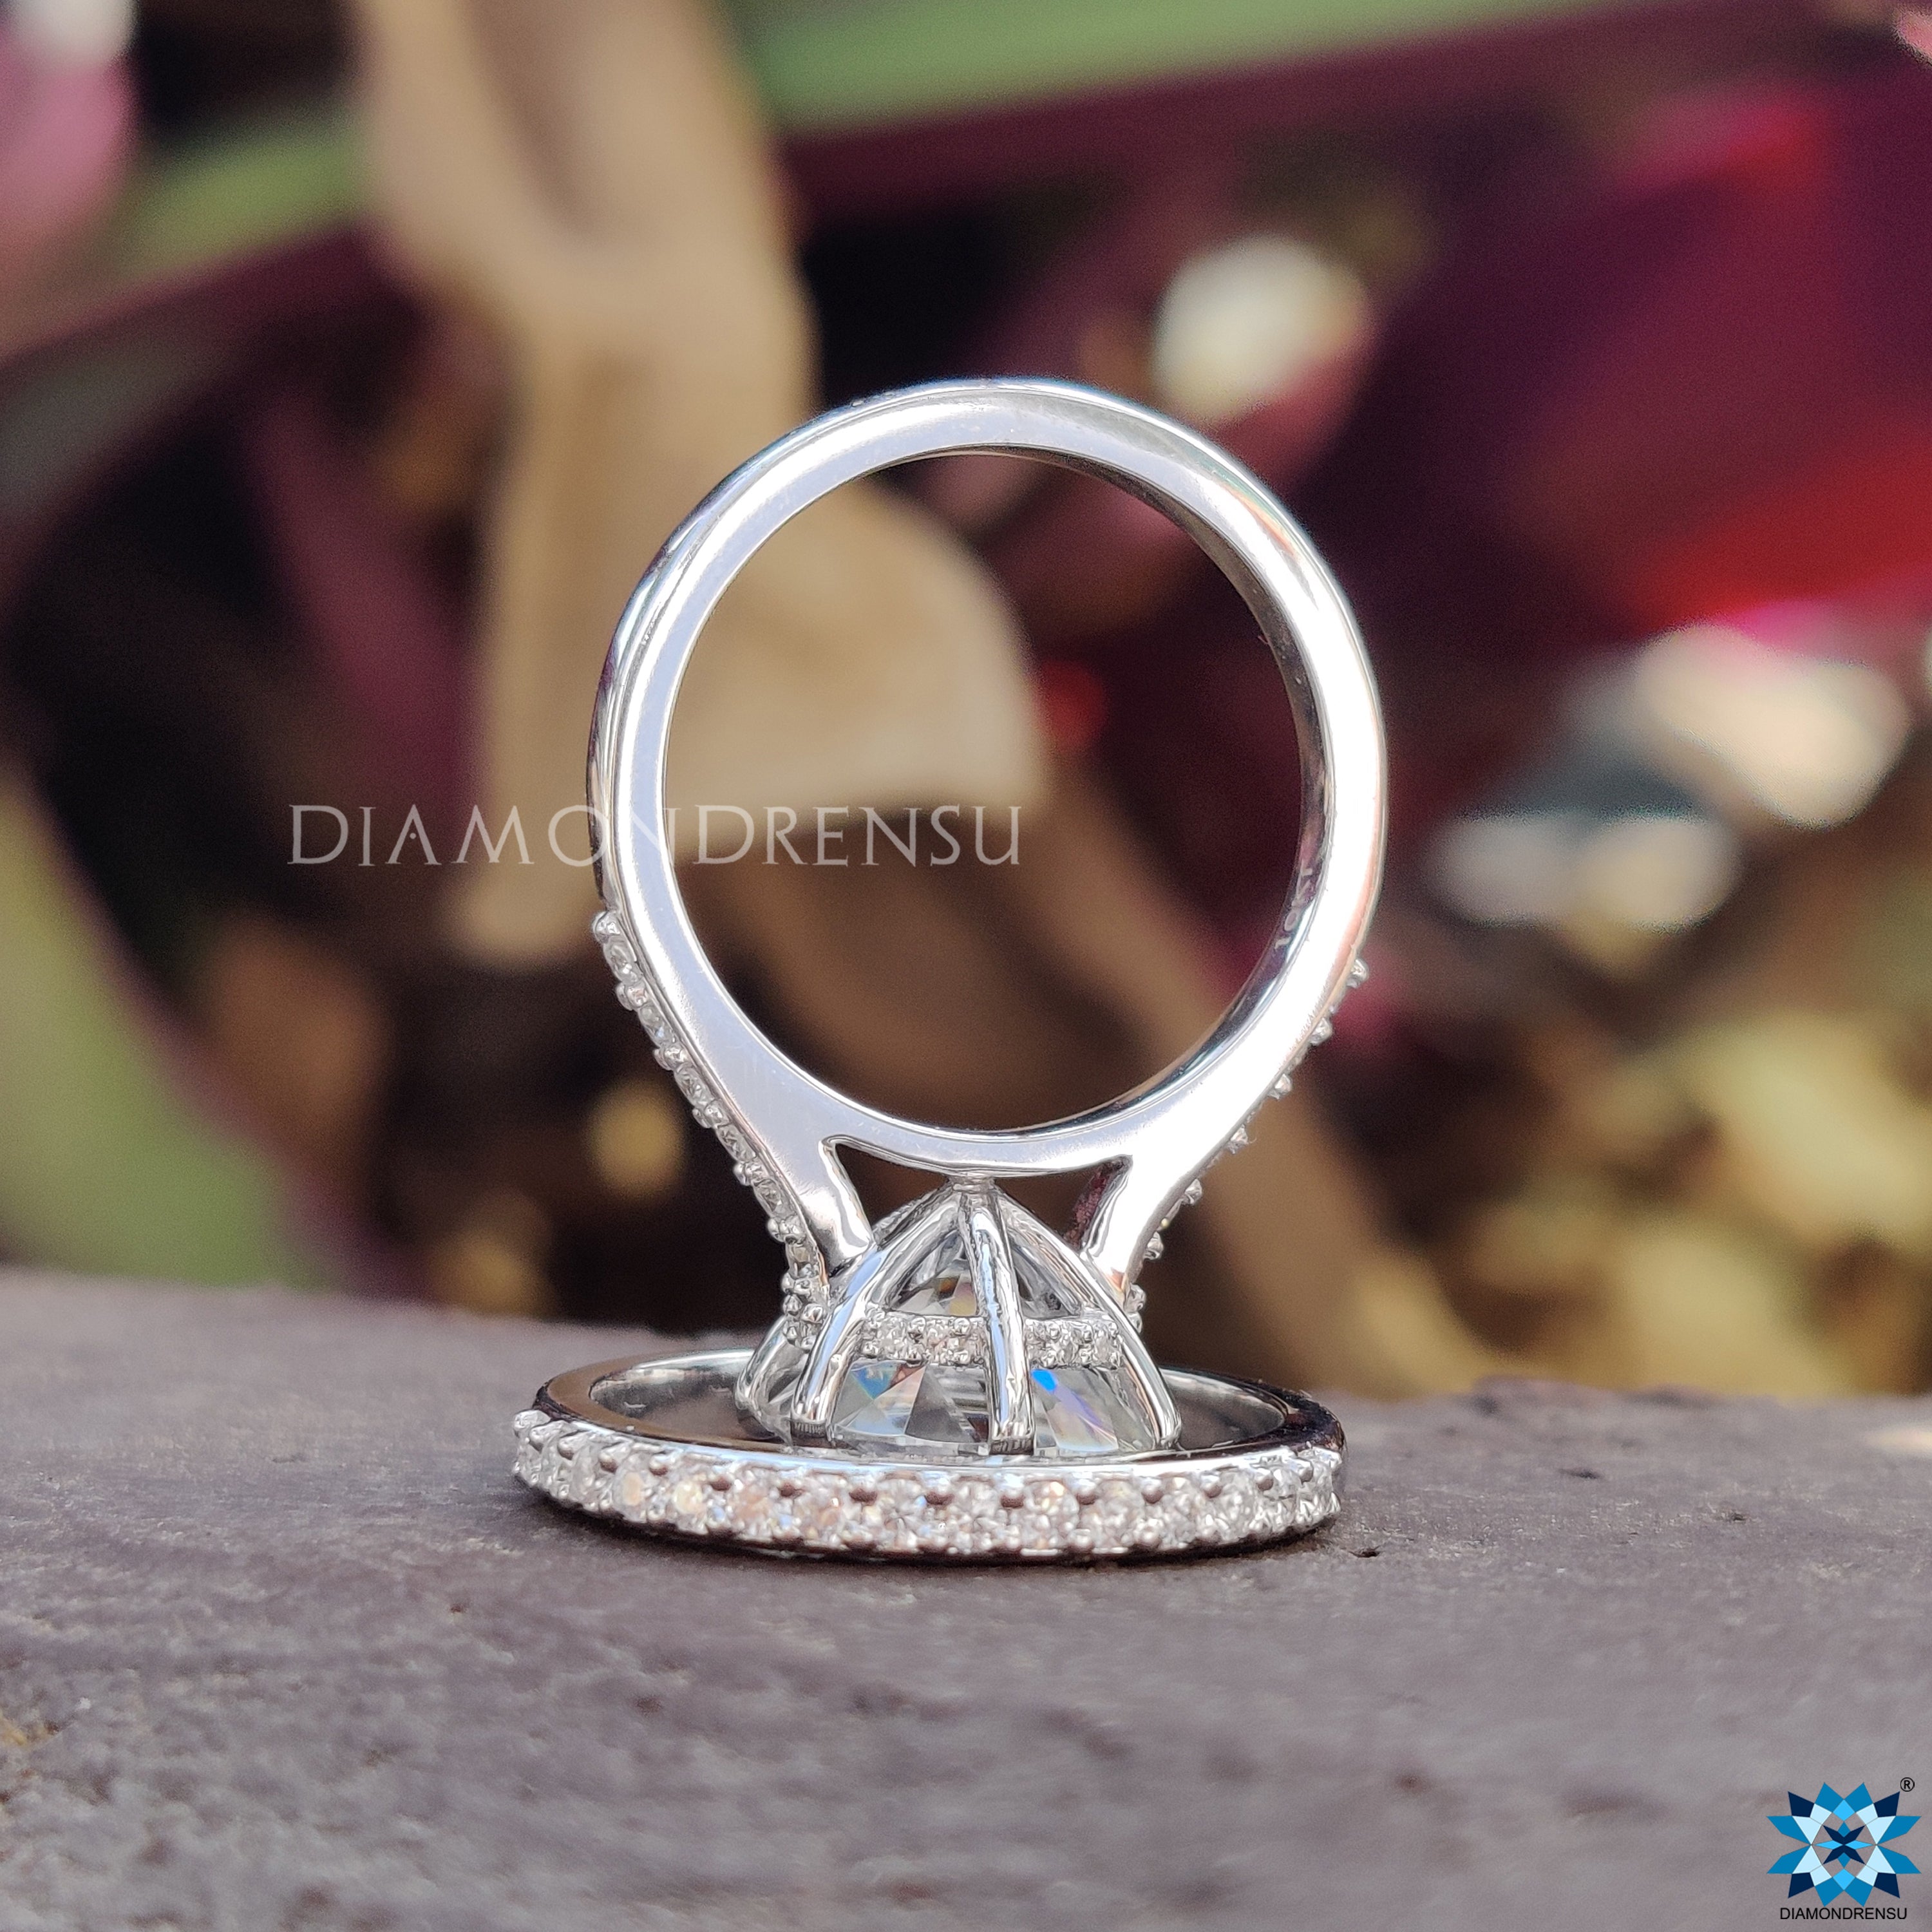 customized engagement ring